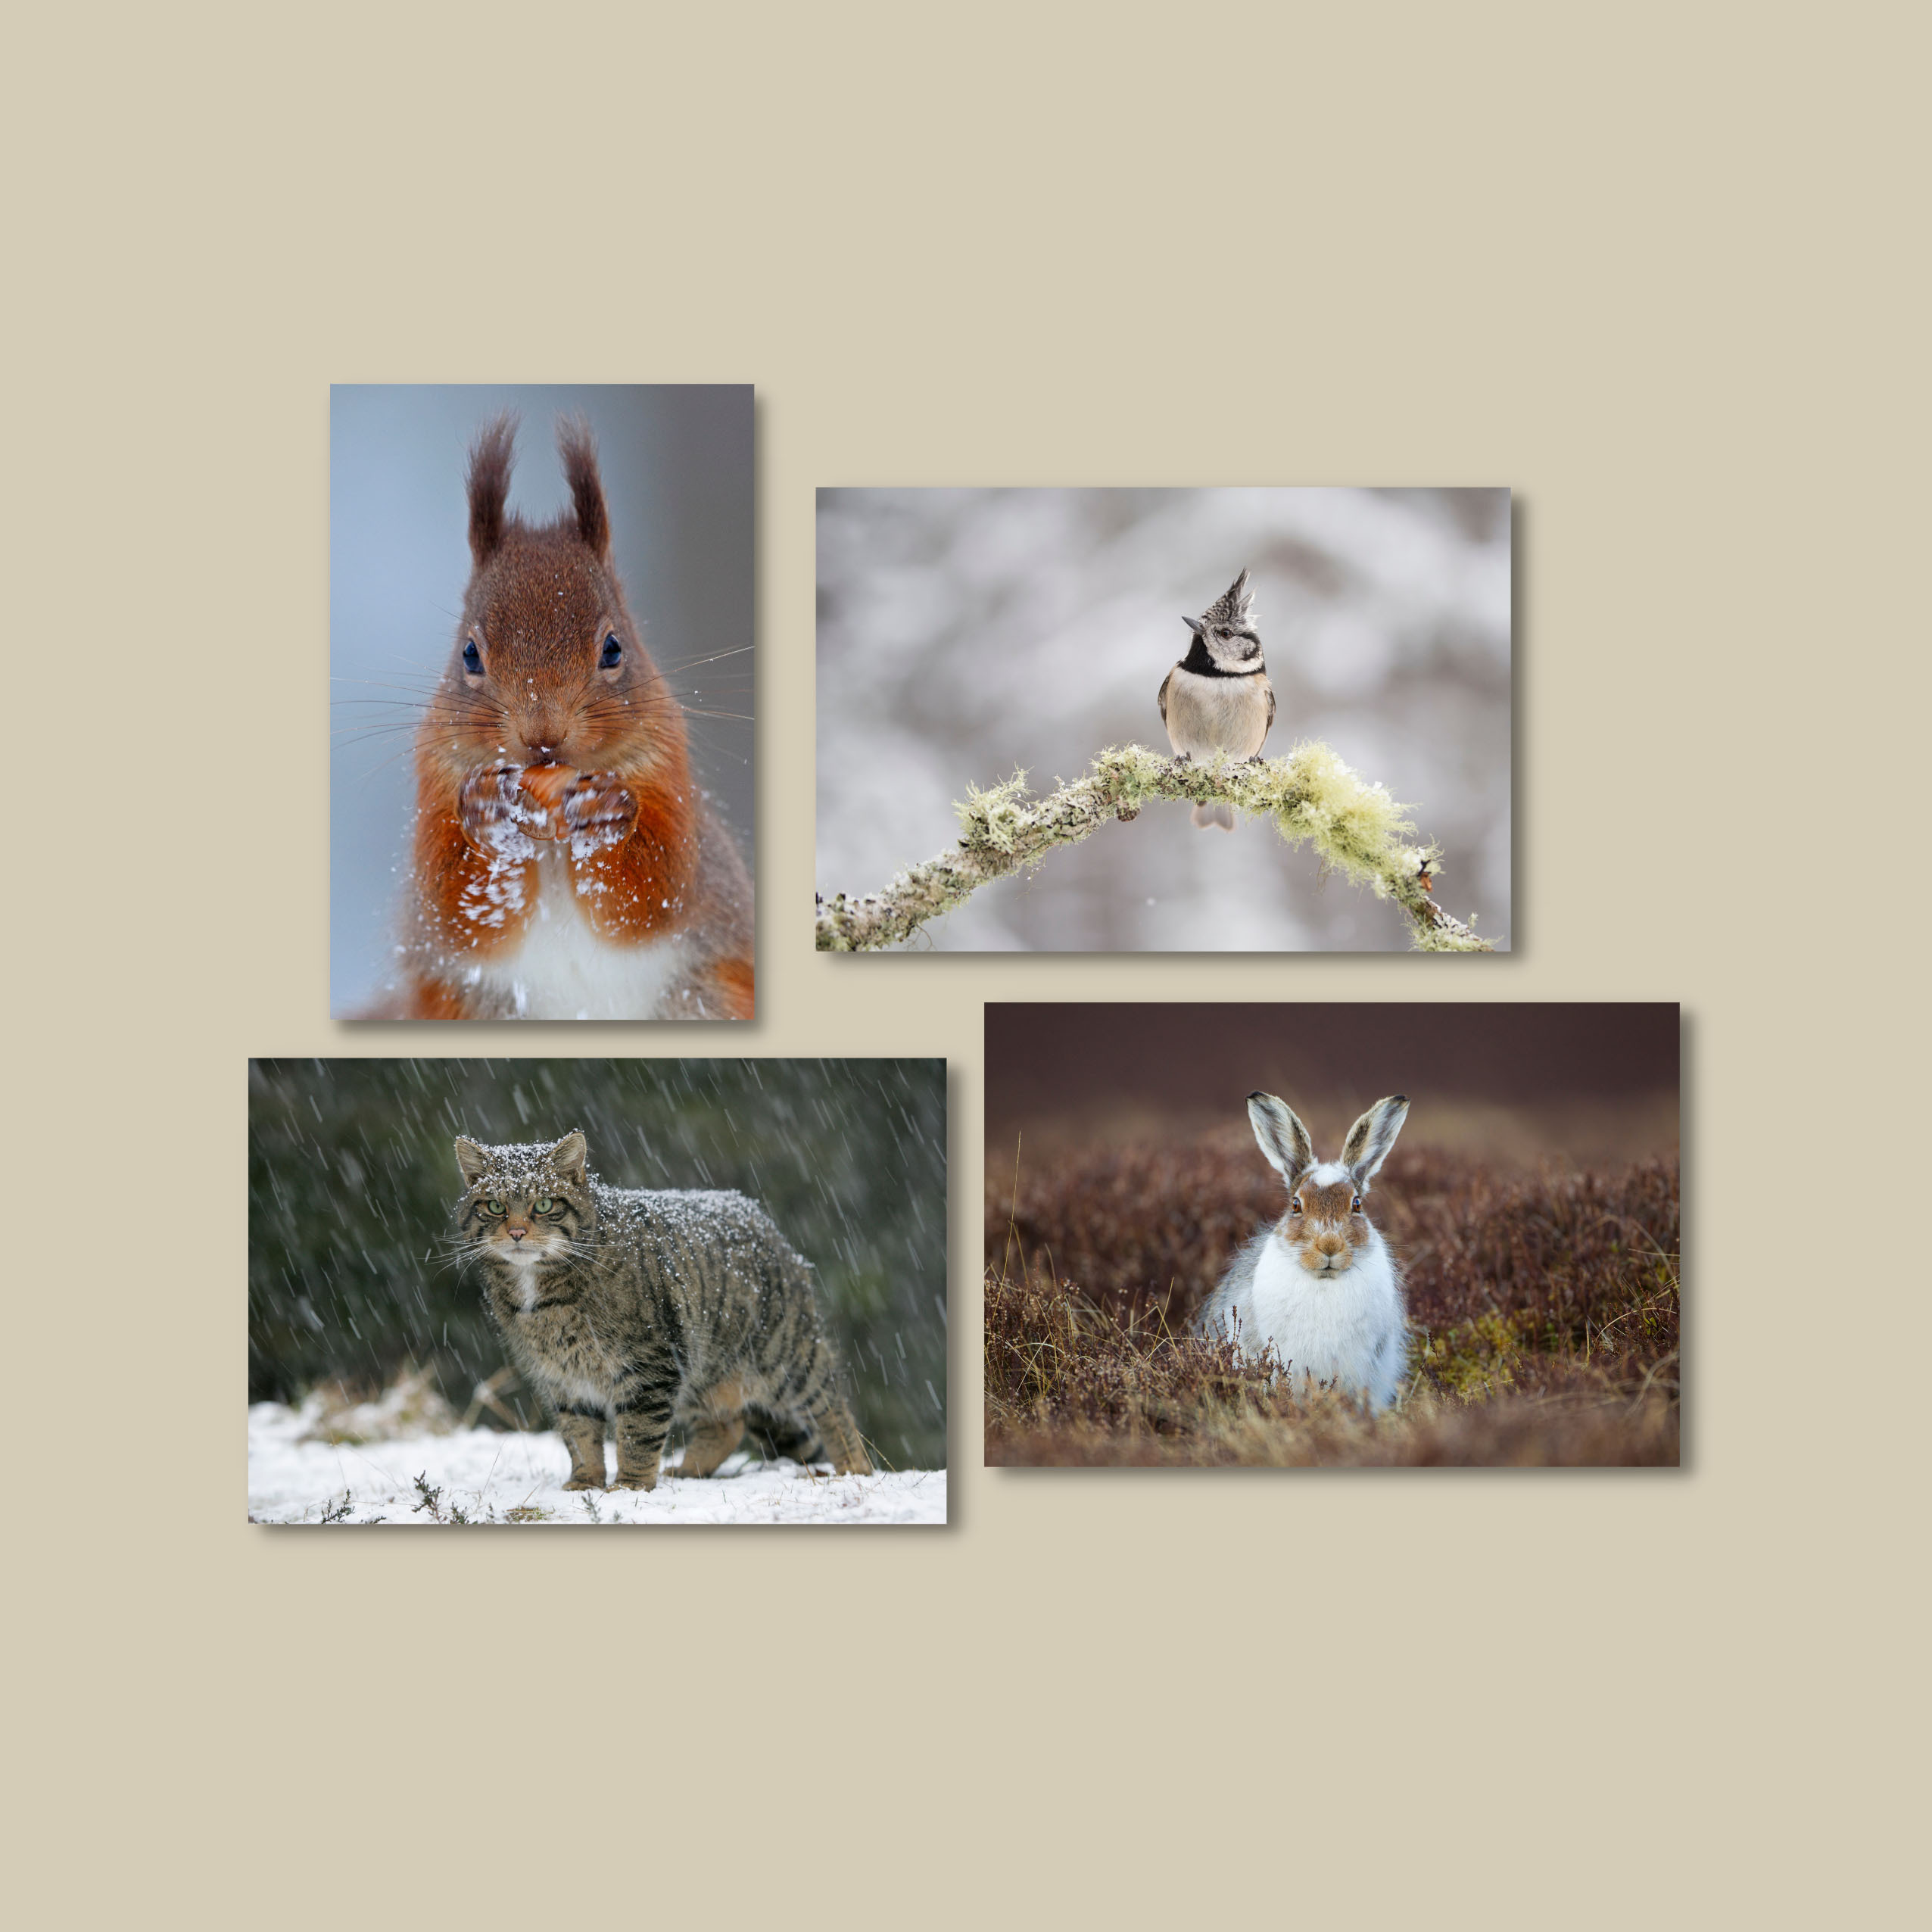 NEW Wildlife greetings cards